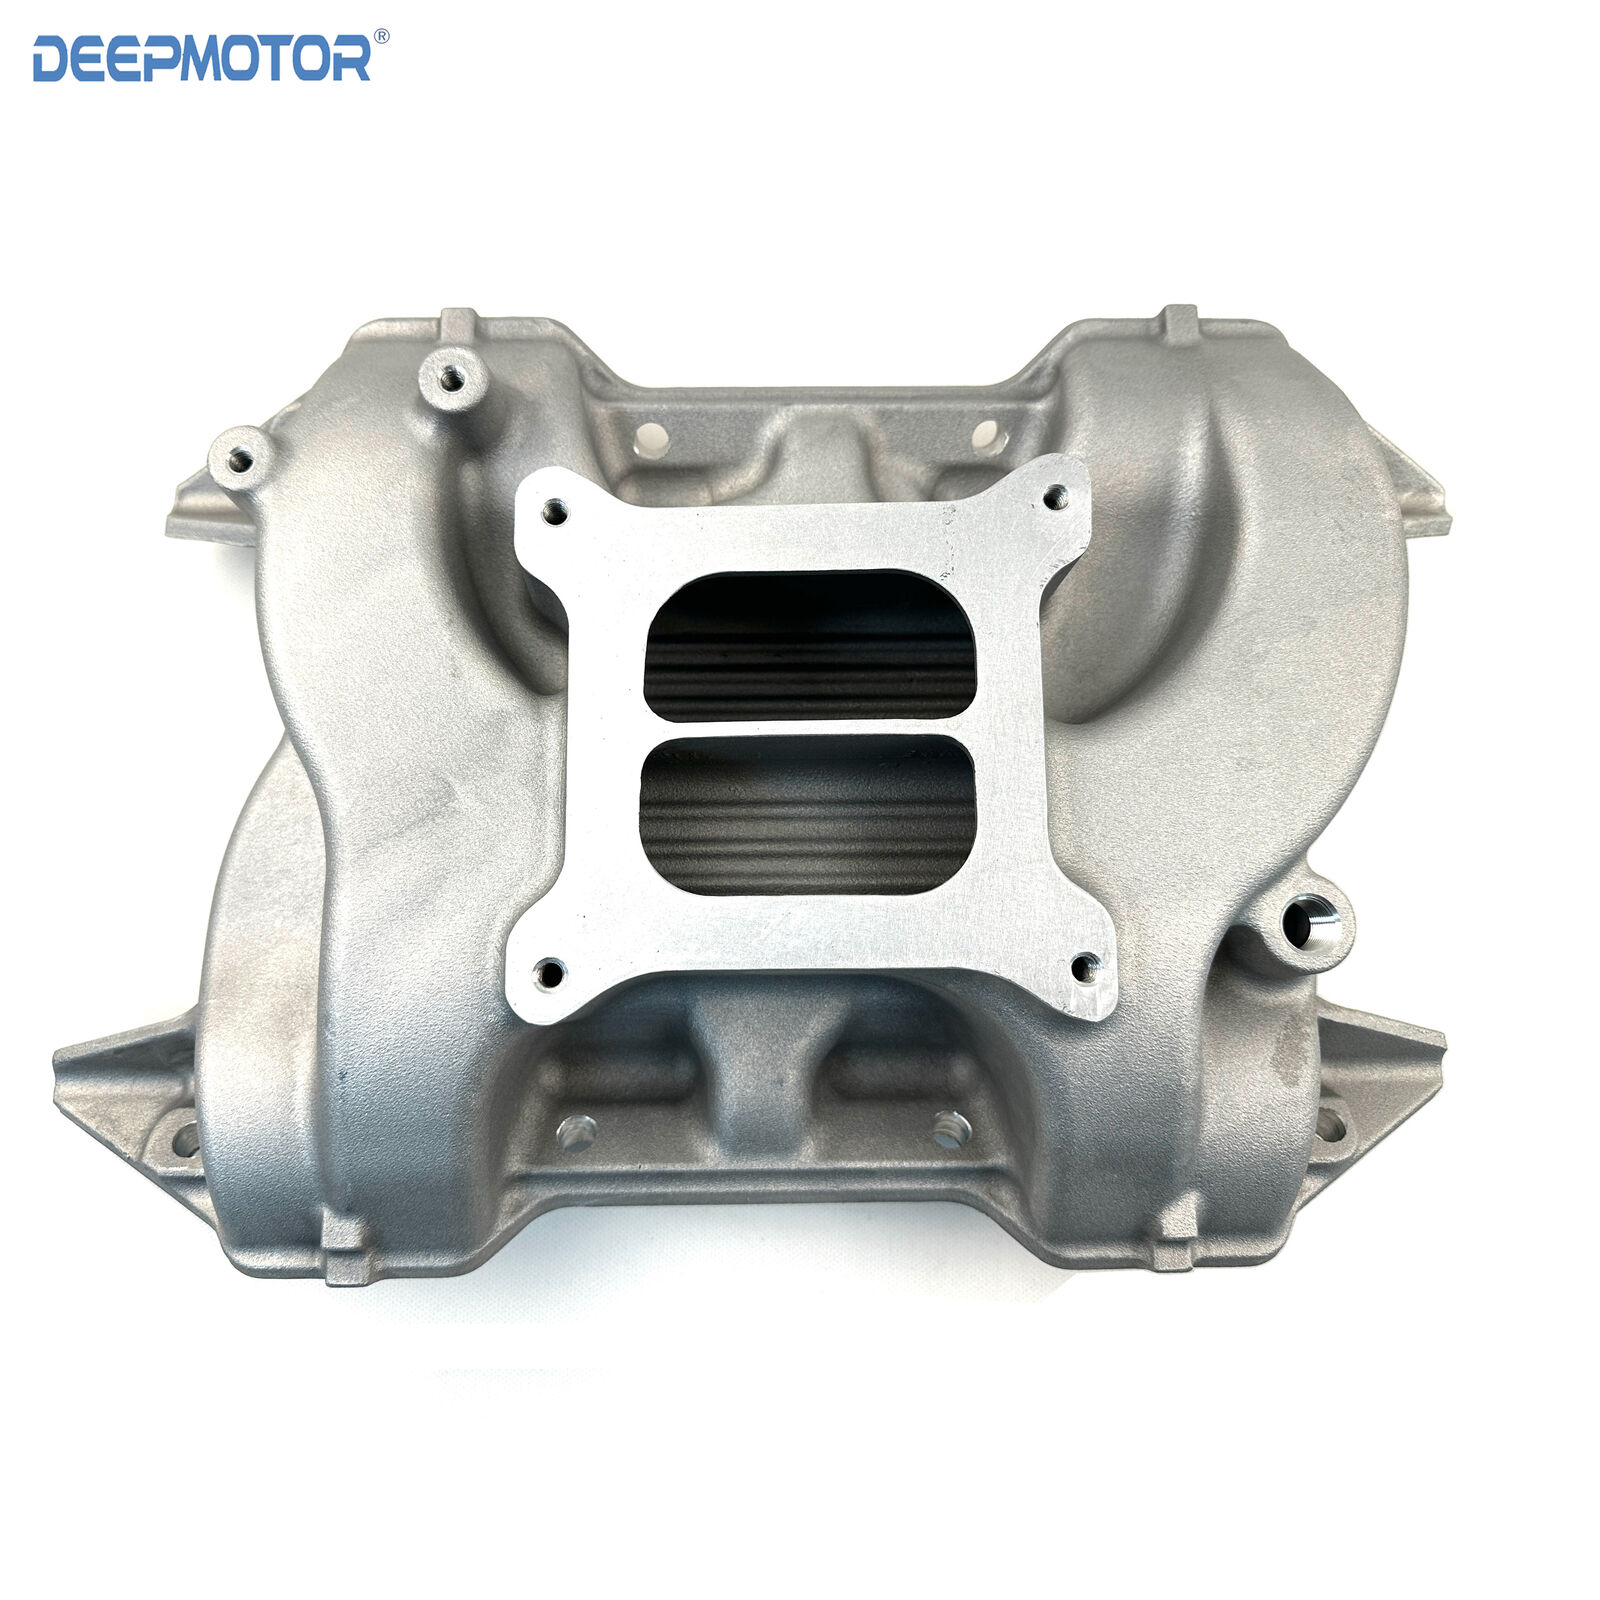 Deepmotor Aluminum Intake Manifold for Big Block Chrysler BBC Mopar 413 426 440